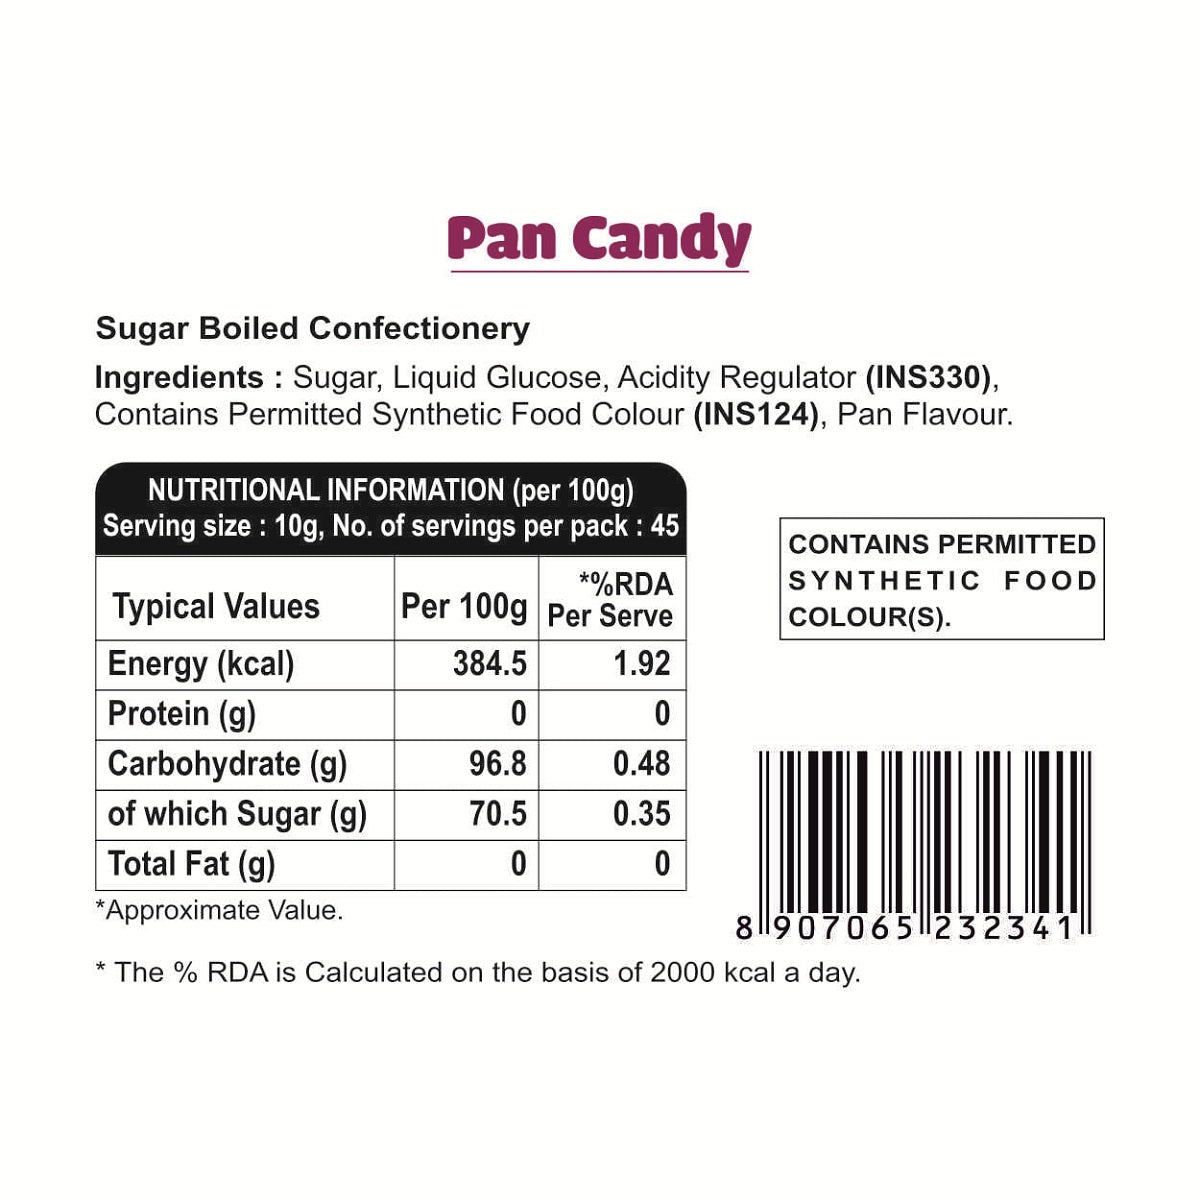 Puramio Pan Candy II Flavoured Sugar Candy II Sweet & Chatpata Candy,